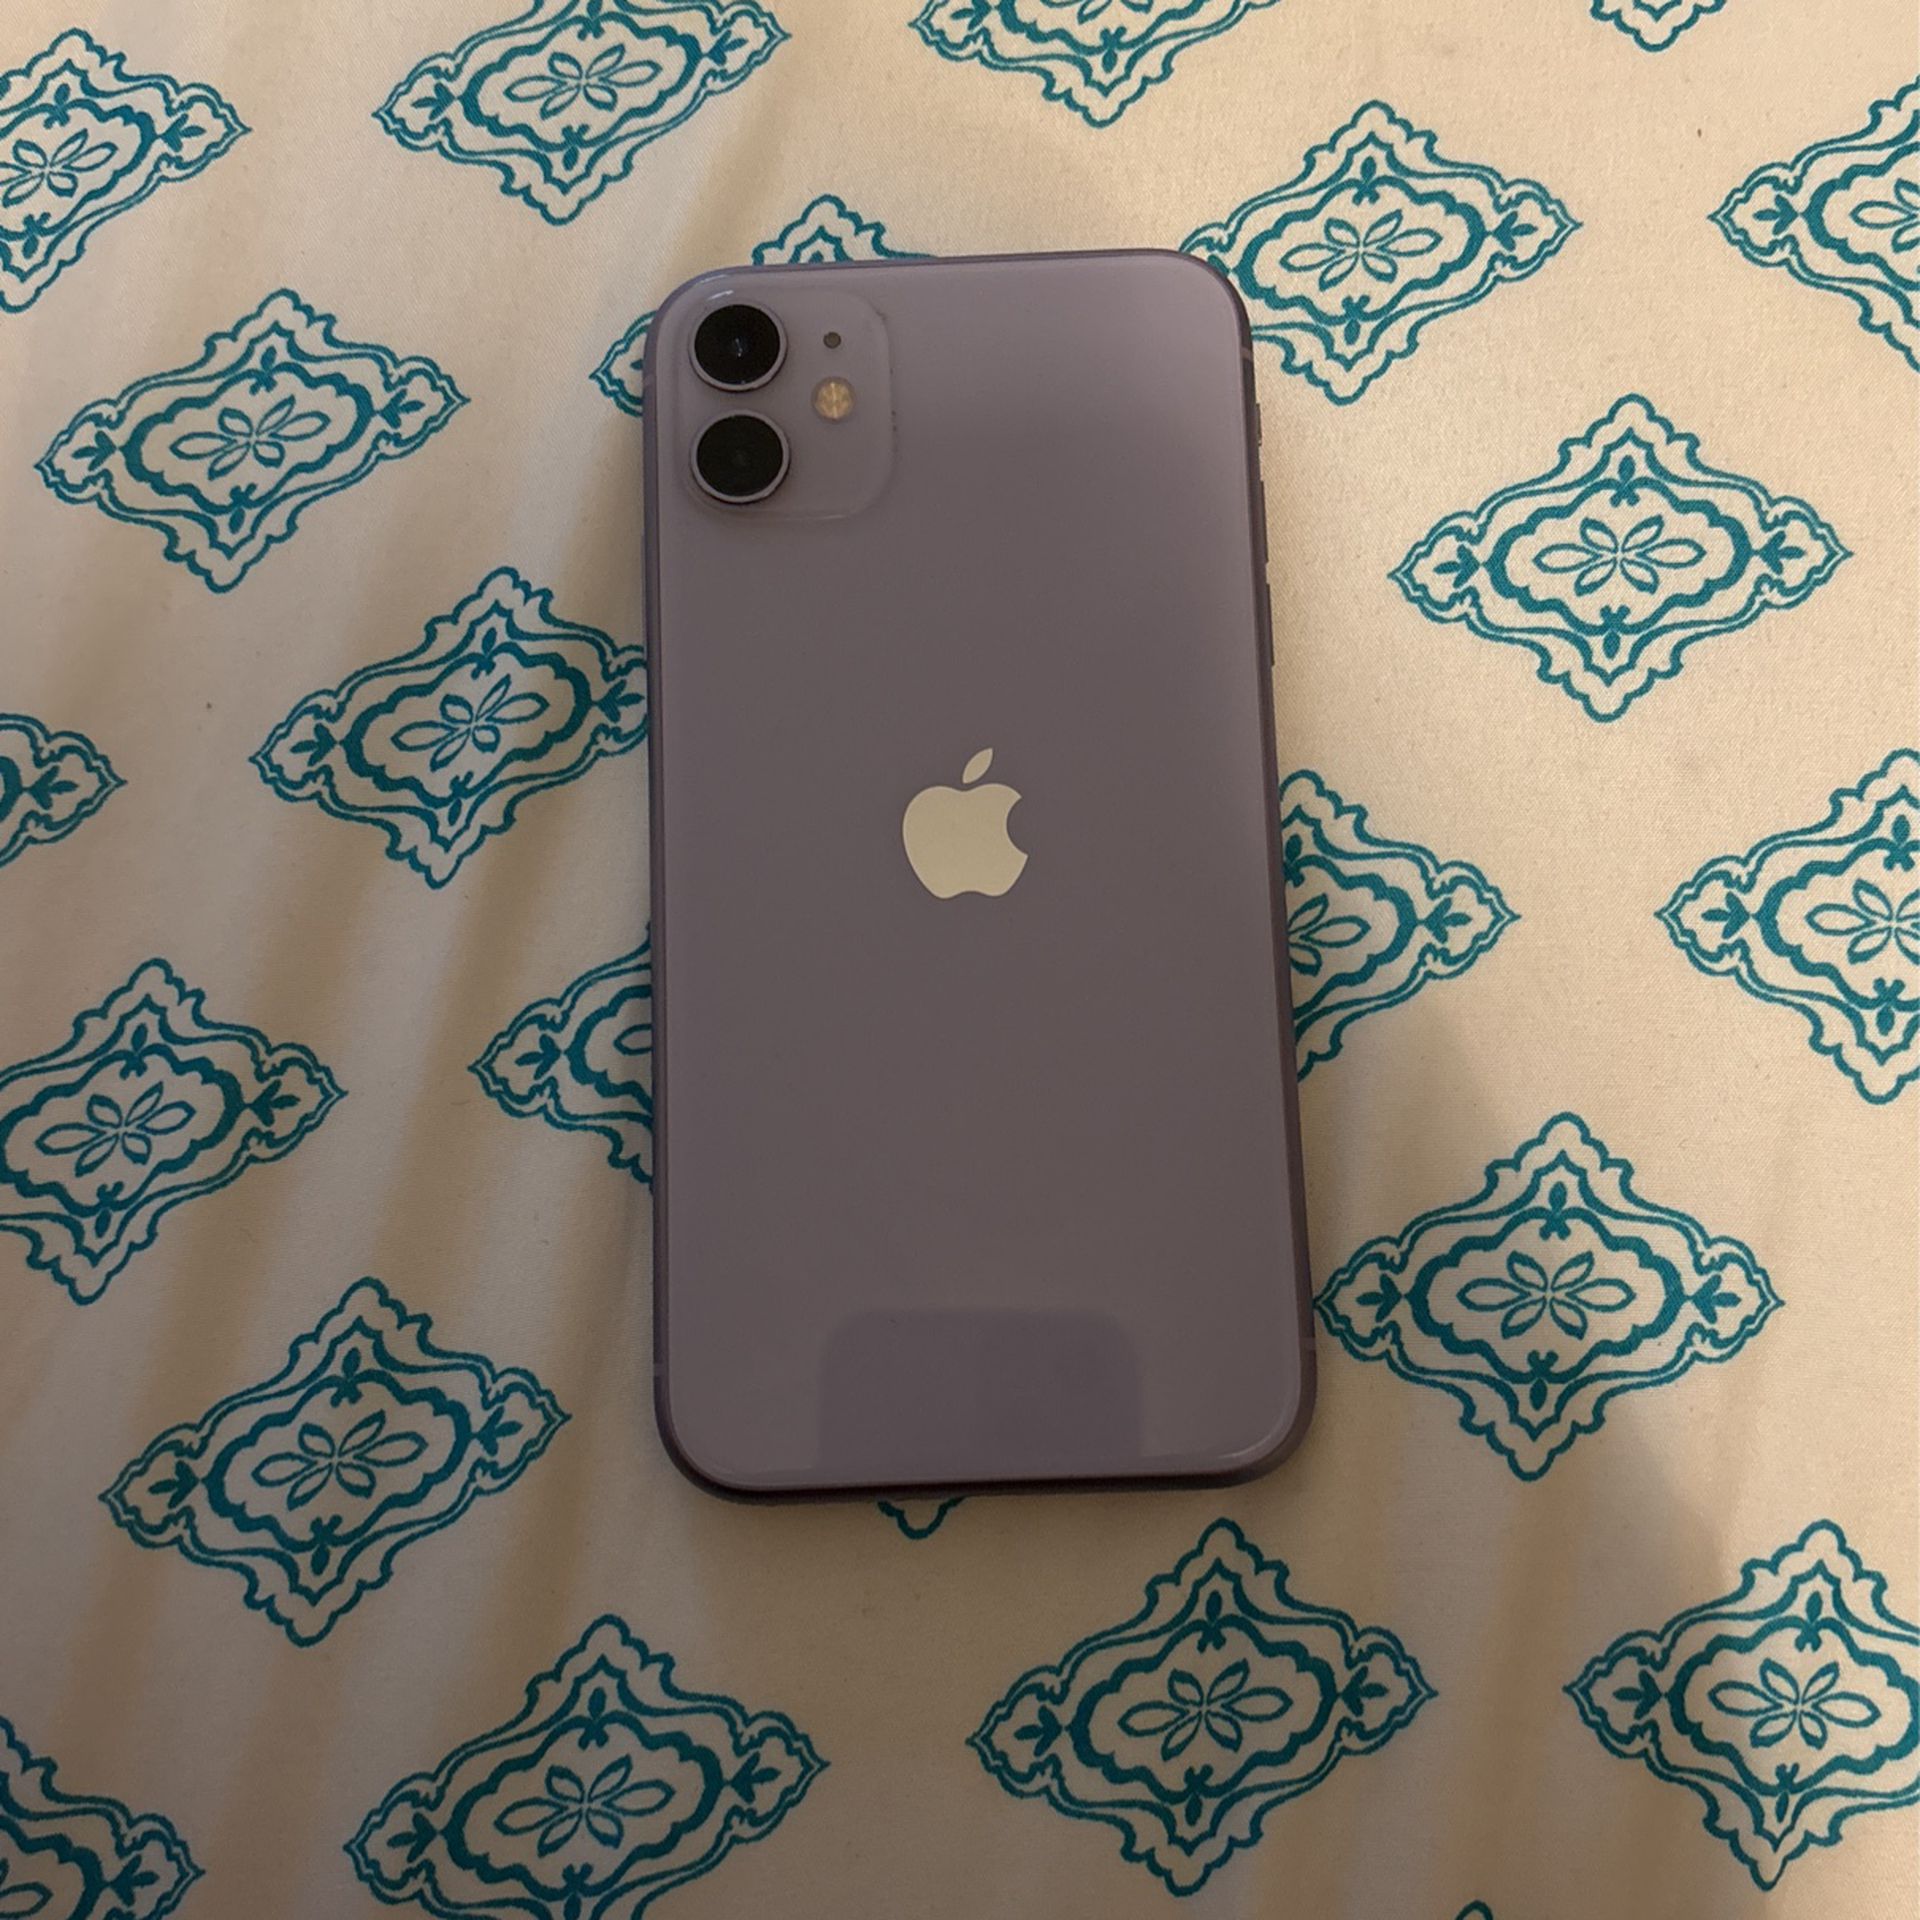 Purple iPhone 11